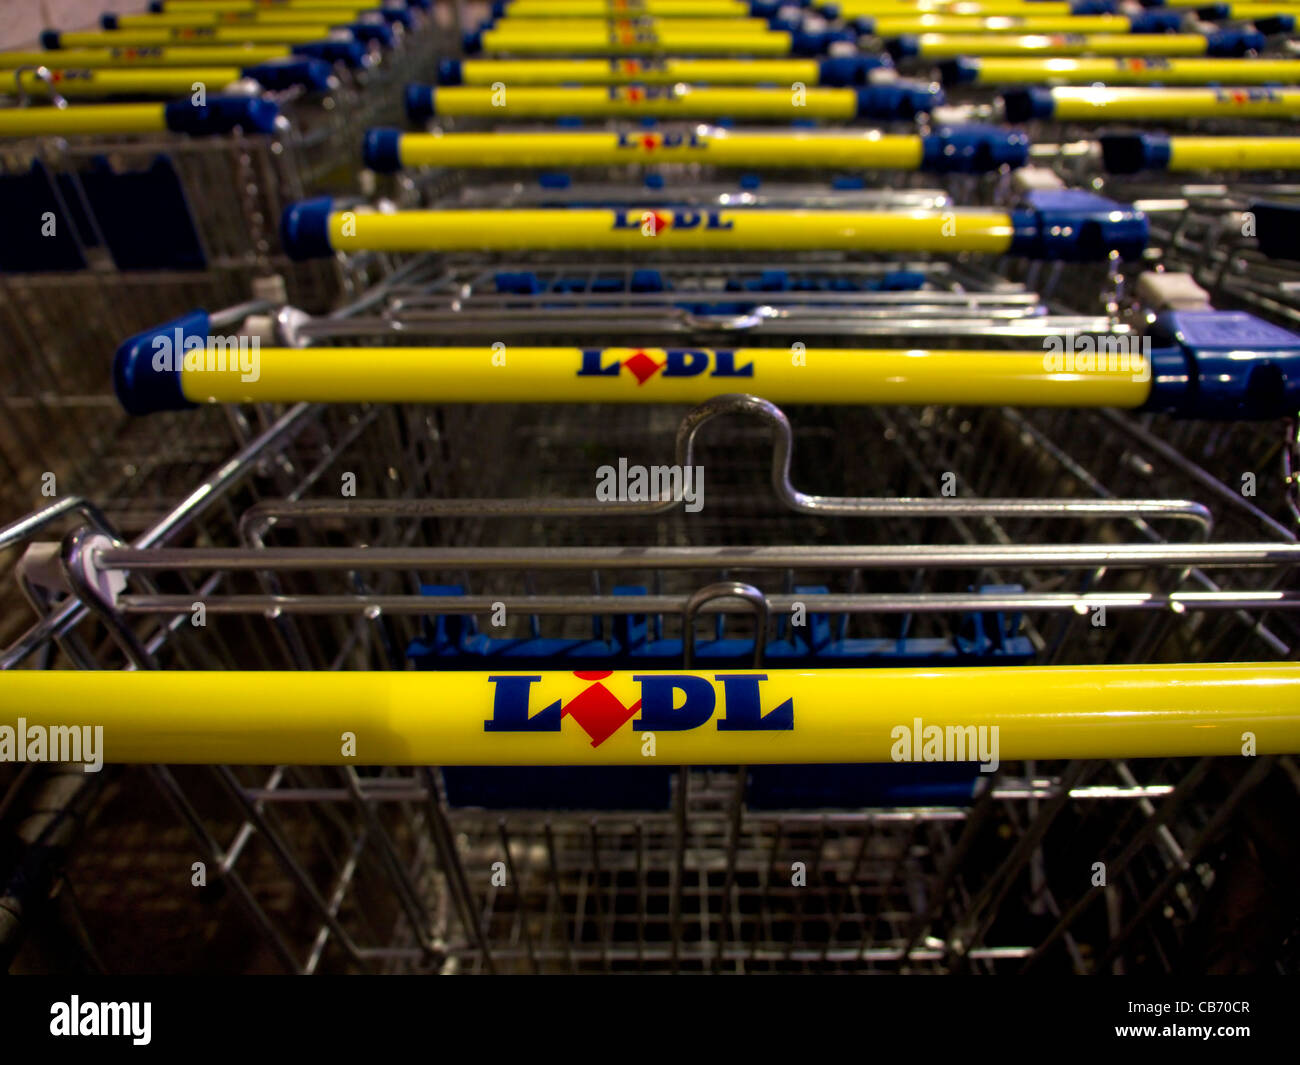 Lidl supermarket trolleys Stock Photo